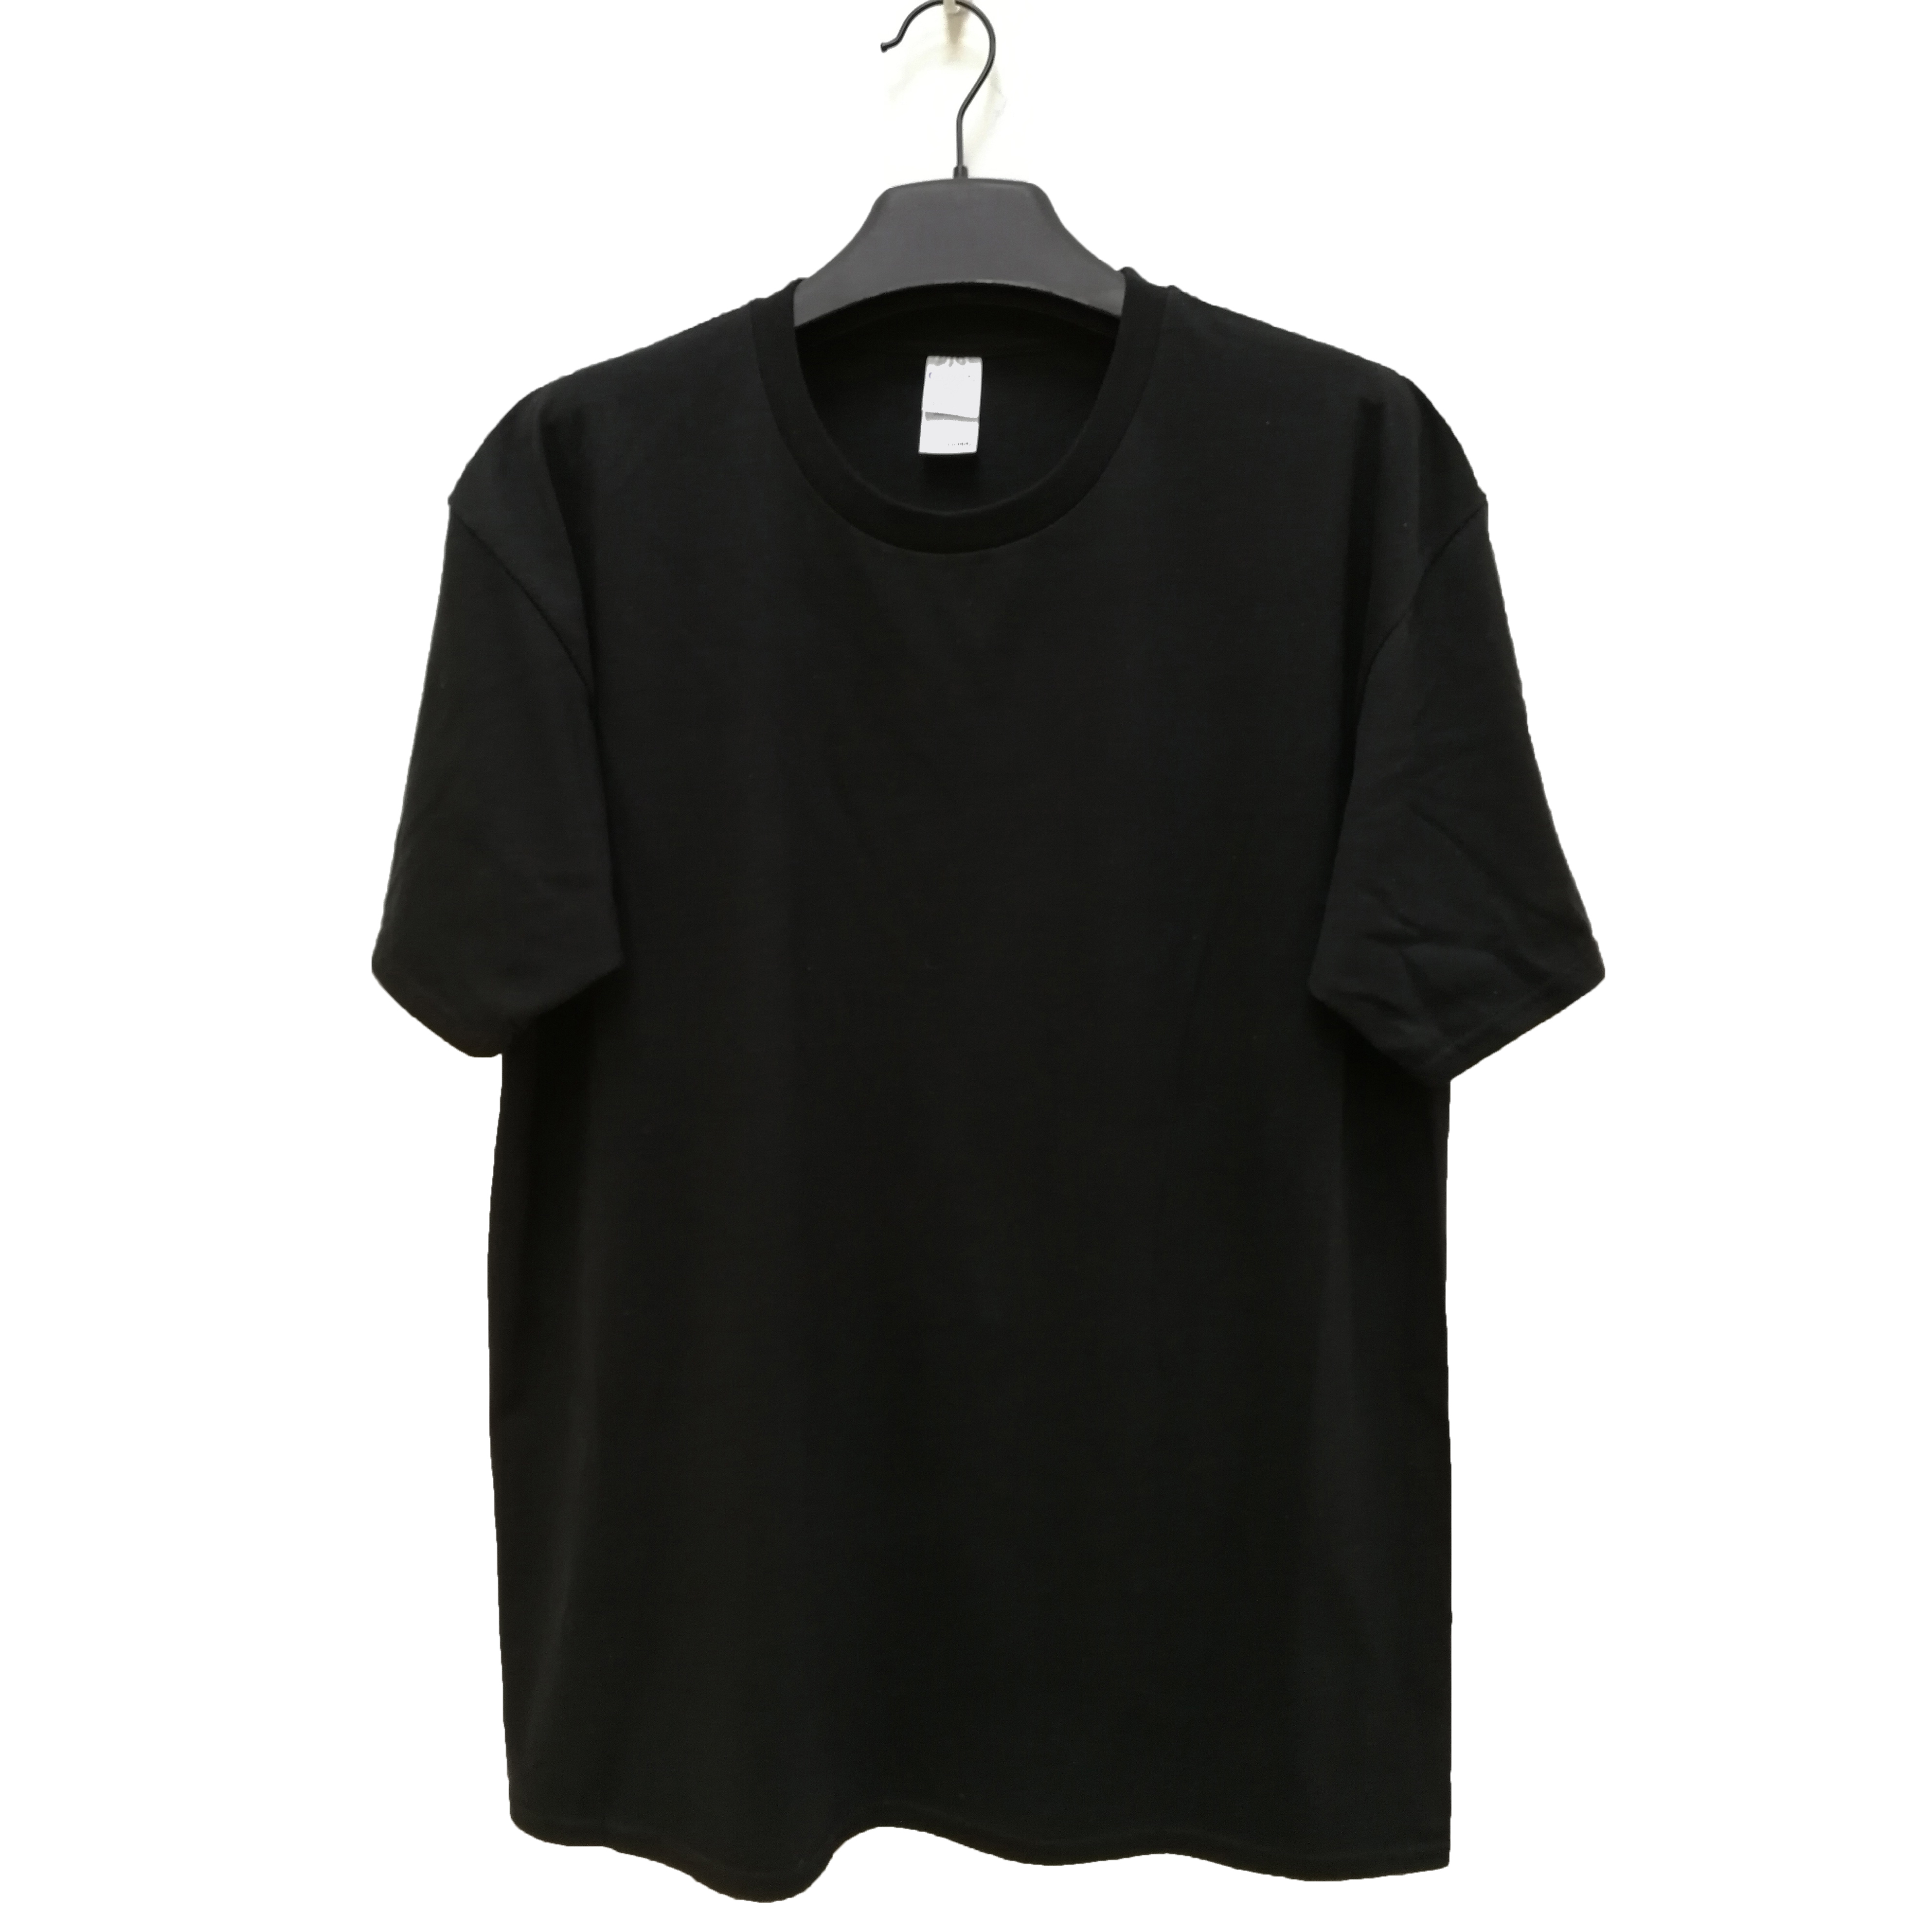 Best Price for Custom Embroidered T Shirts - Unisex plain blank custom logo printing 100% cotton round neck t-shirt – Gift